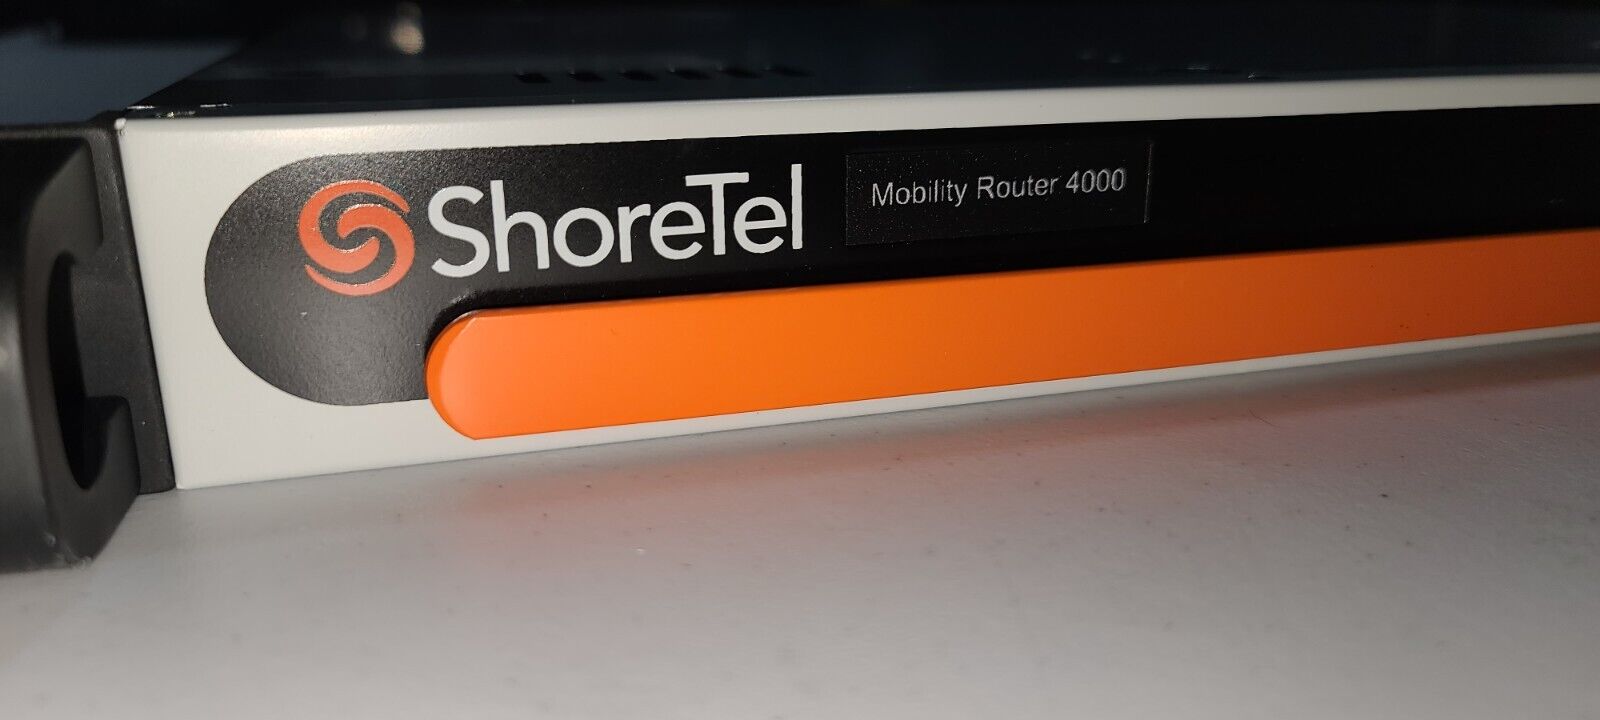 ShoreTel Mobility Router 4000 5016i-MRF Rack Mount (Used)